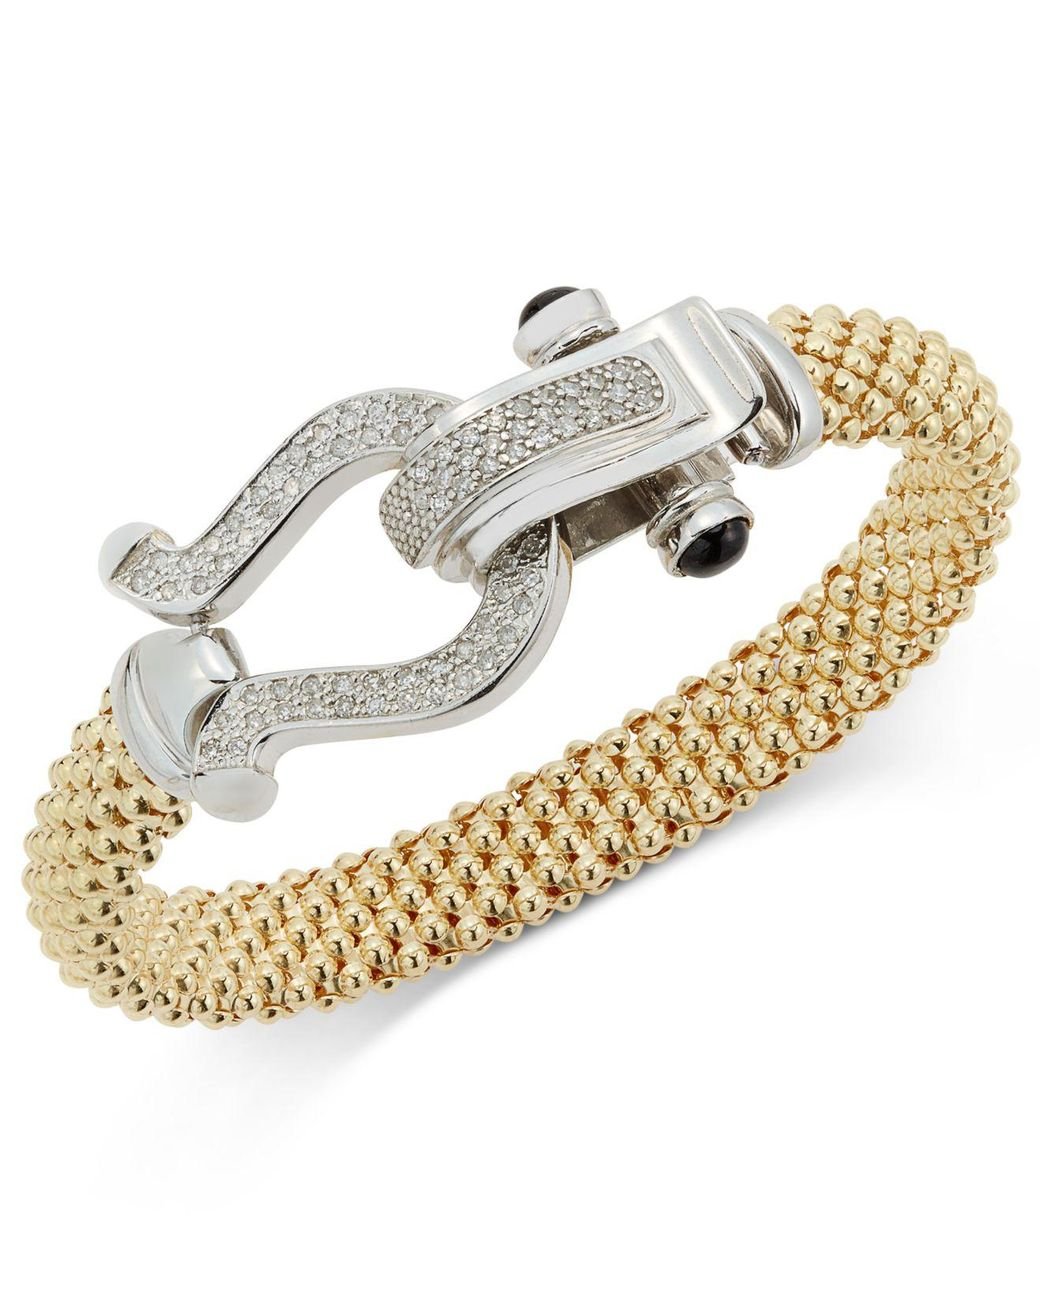 Macy's Children's Identification Bracelet in 14k Gold - Macy's